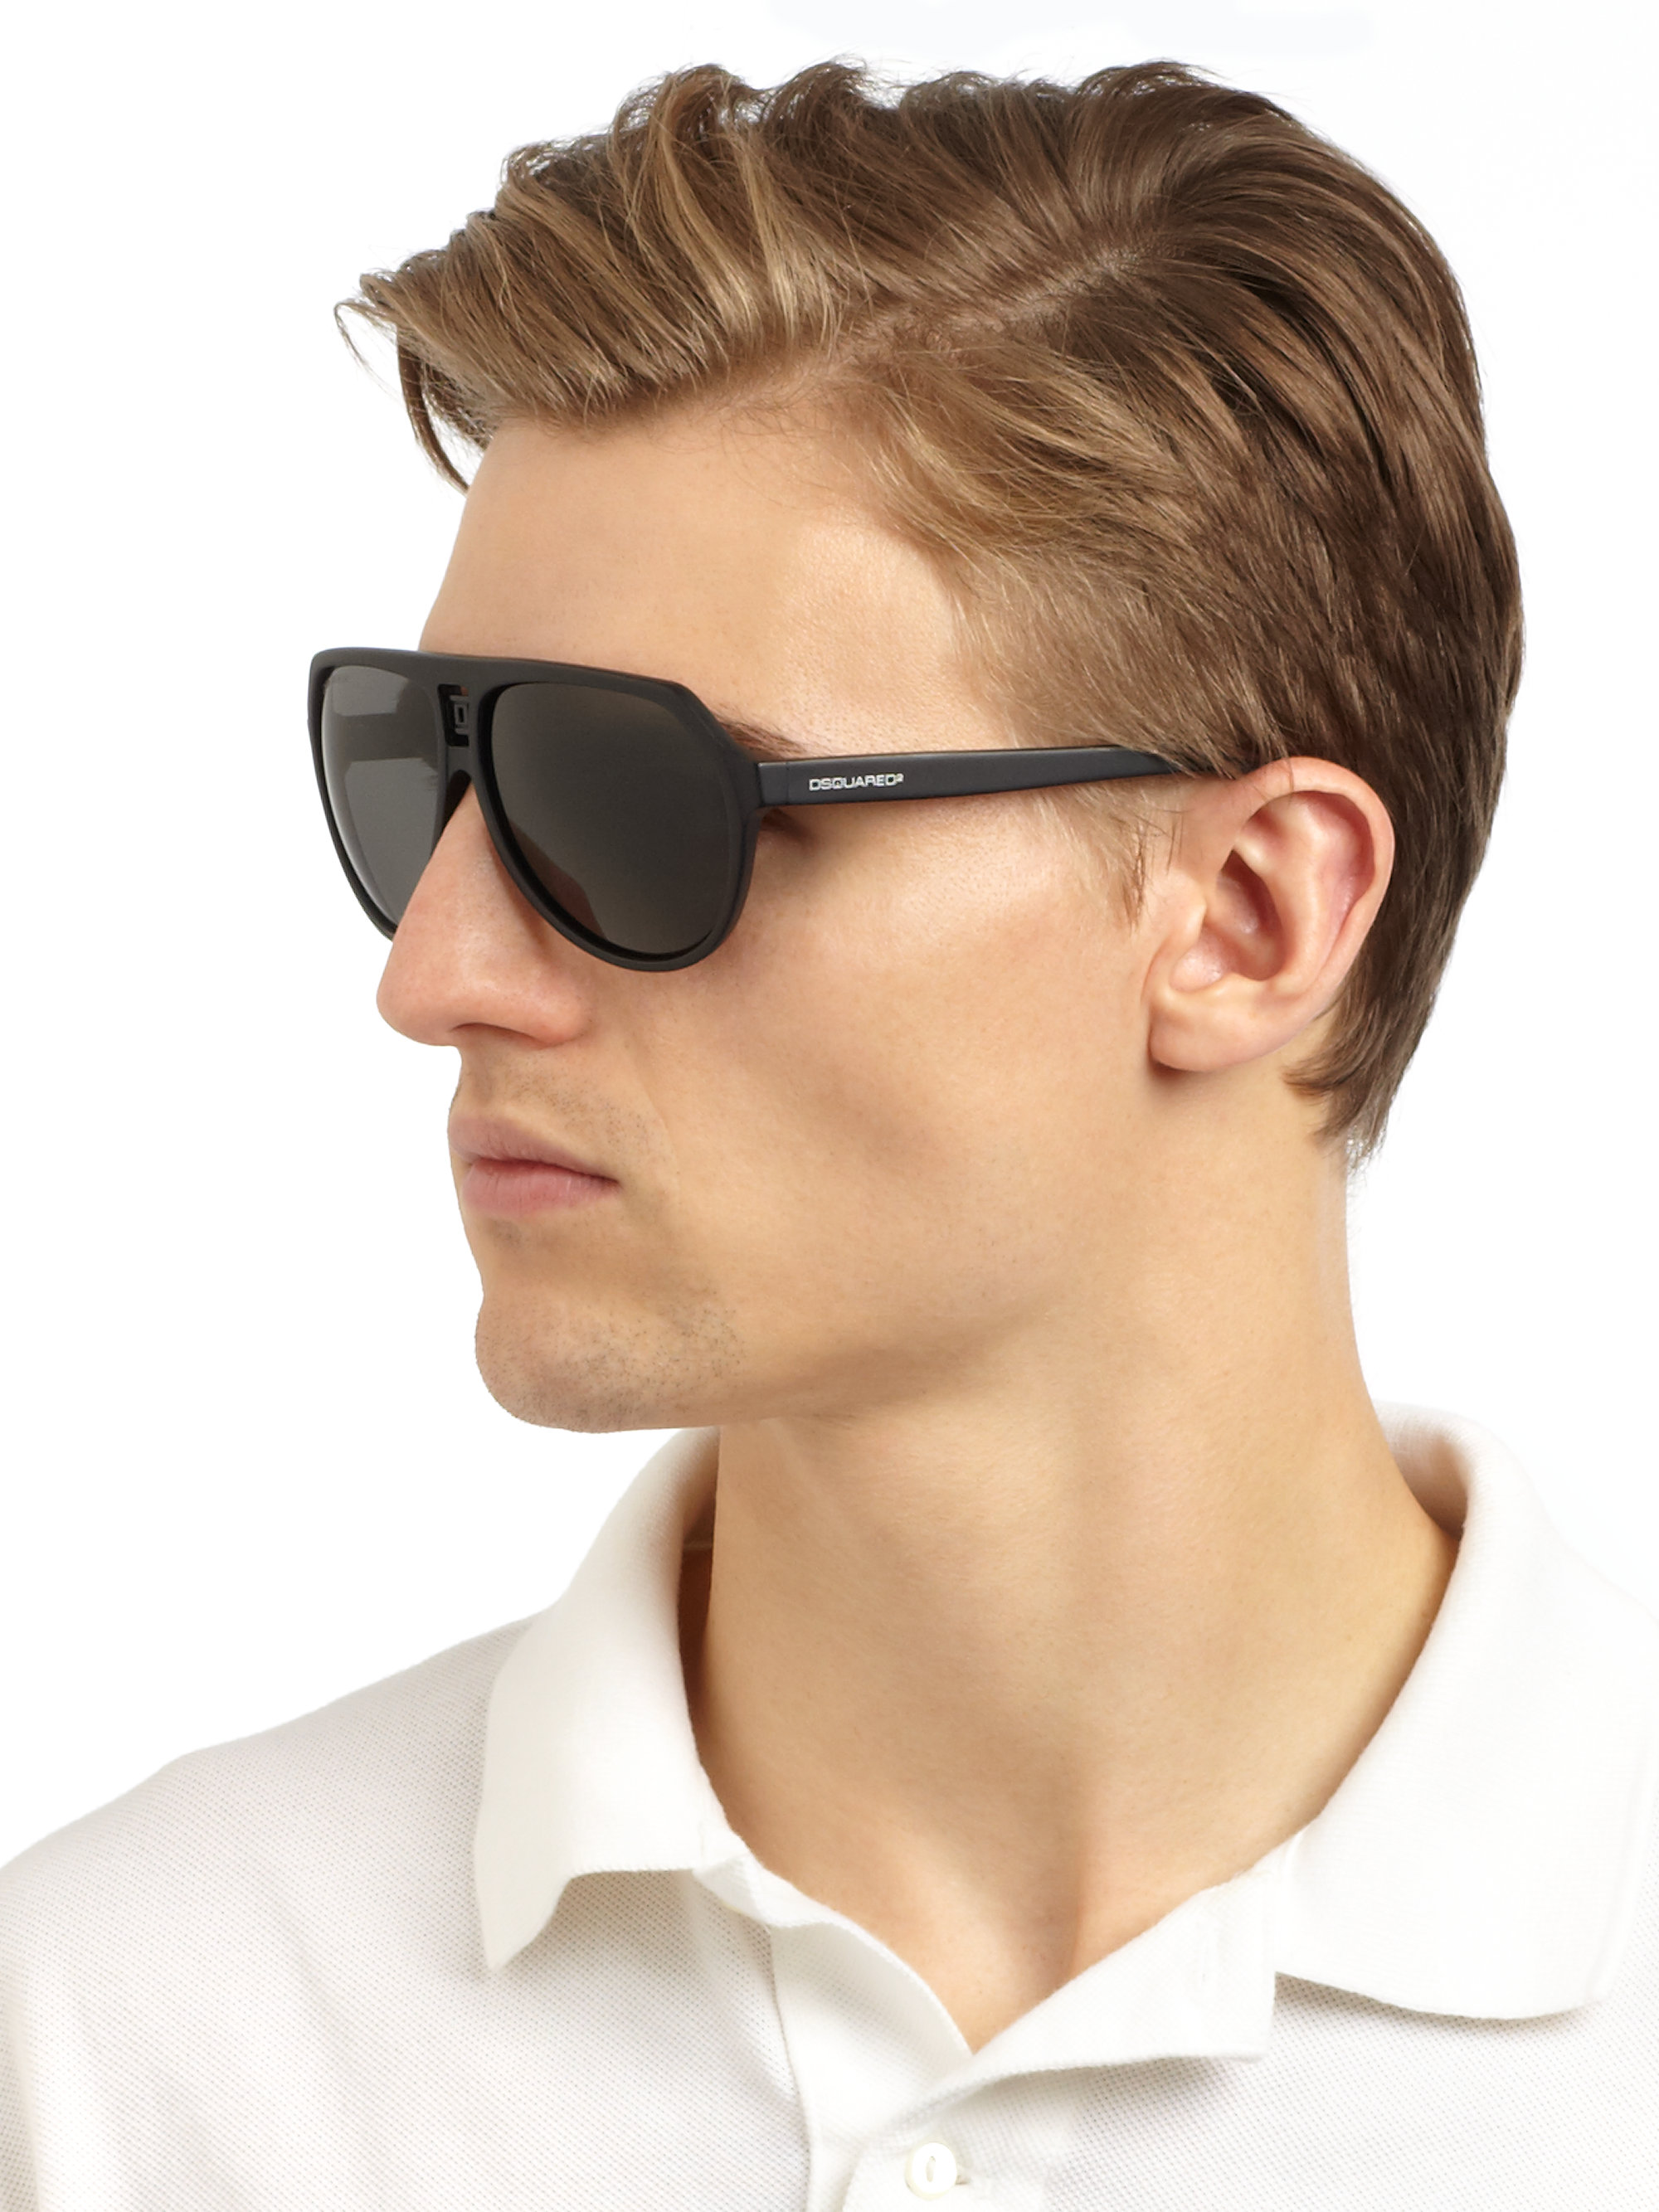 DSquared² Aviator Plastic Sunglasses in Black for Men - Lyst